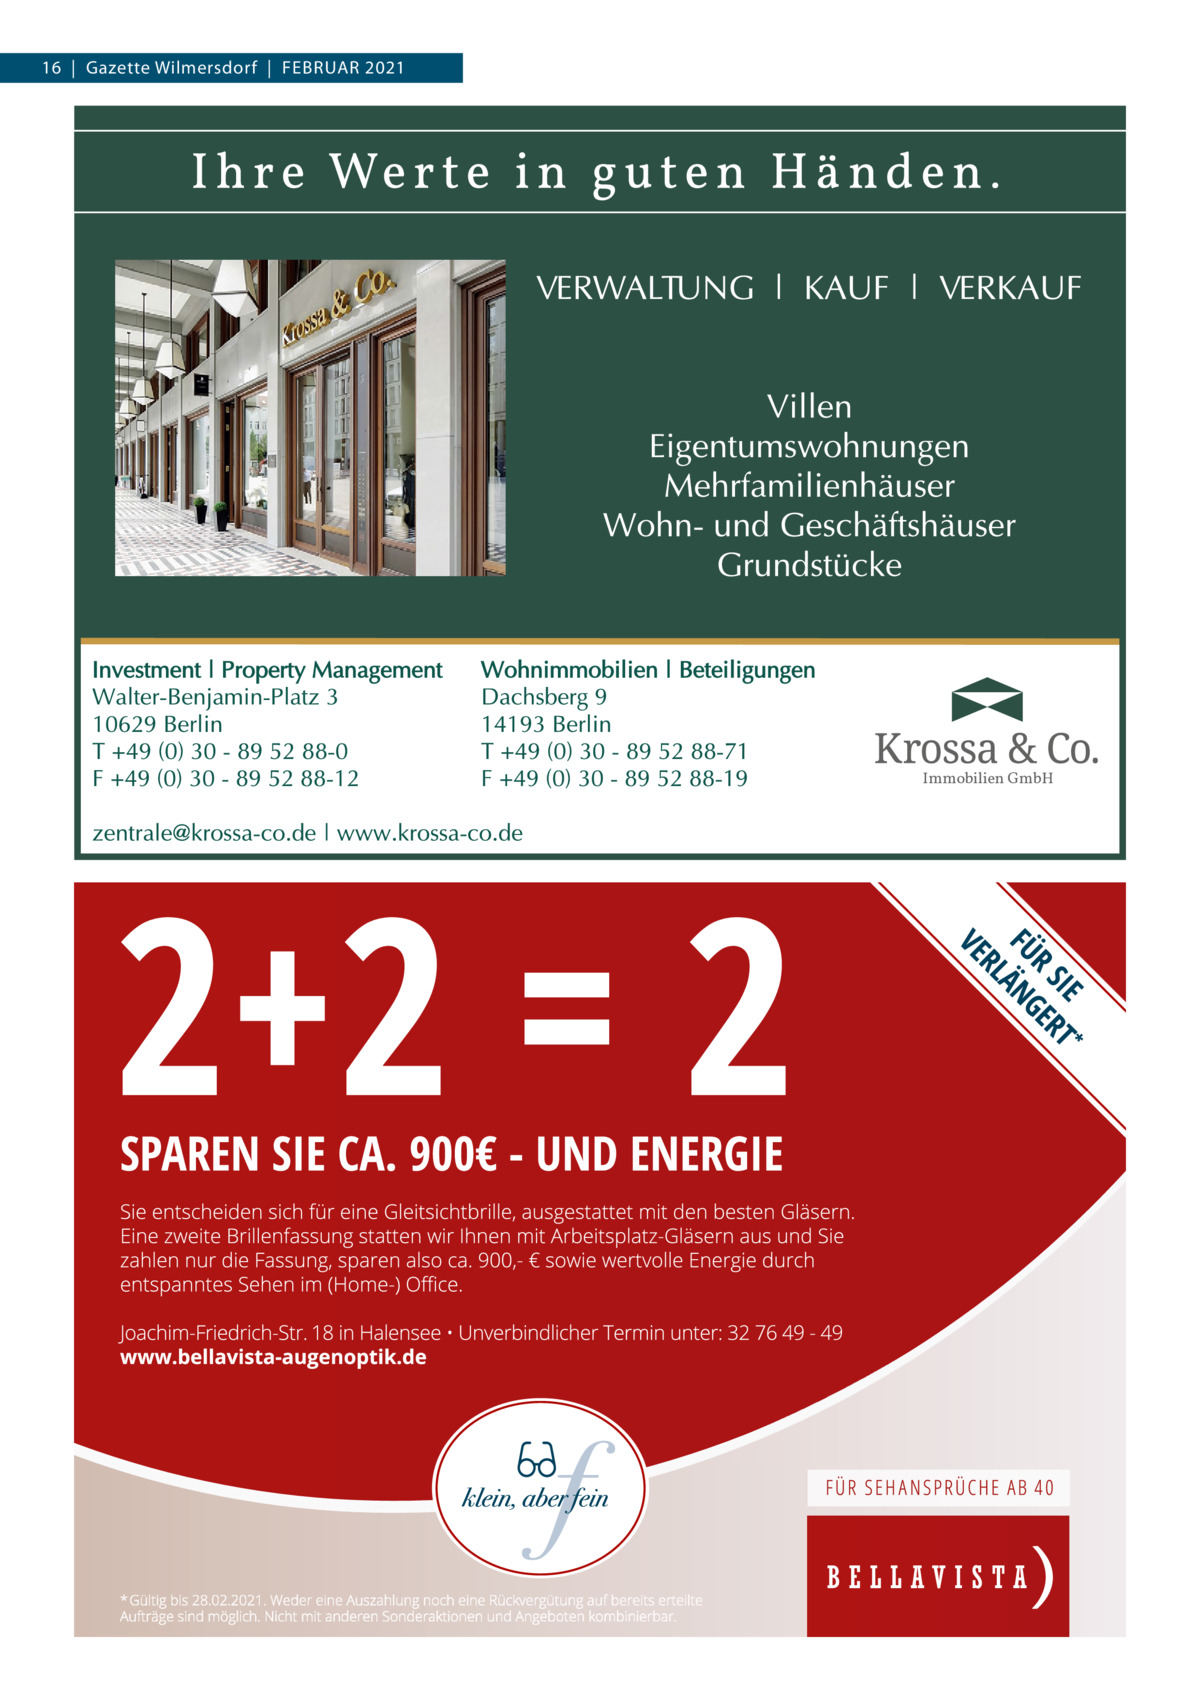 16  |  Gazette Wilmersdorf  |  Februar 2021  Immobilien GmbH